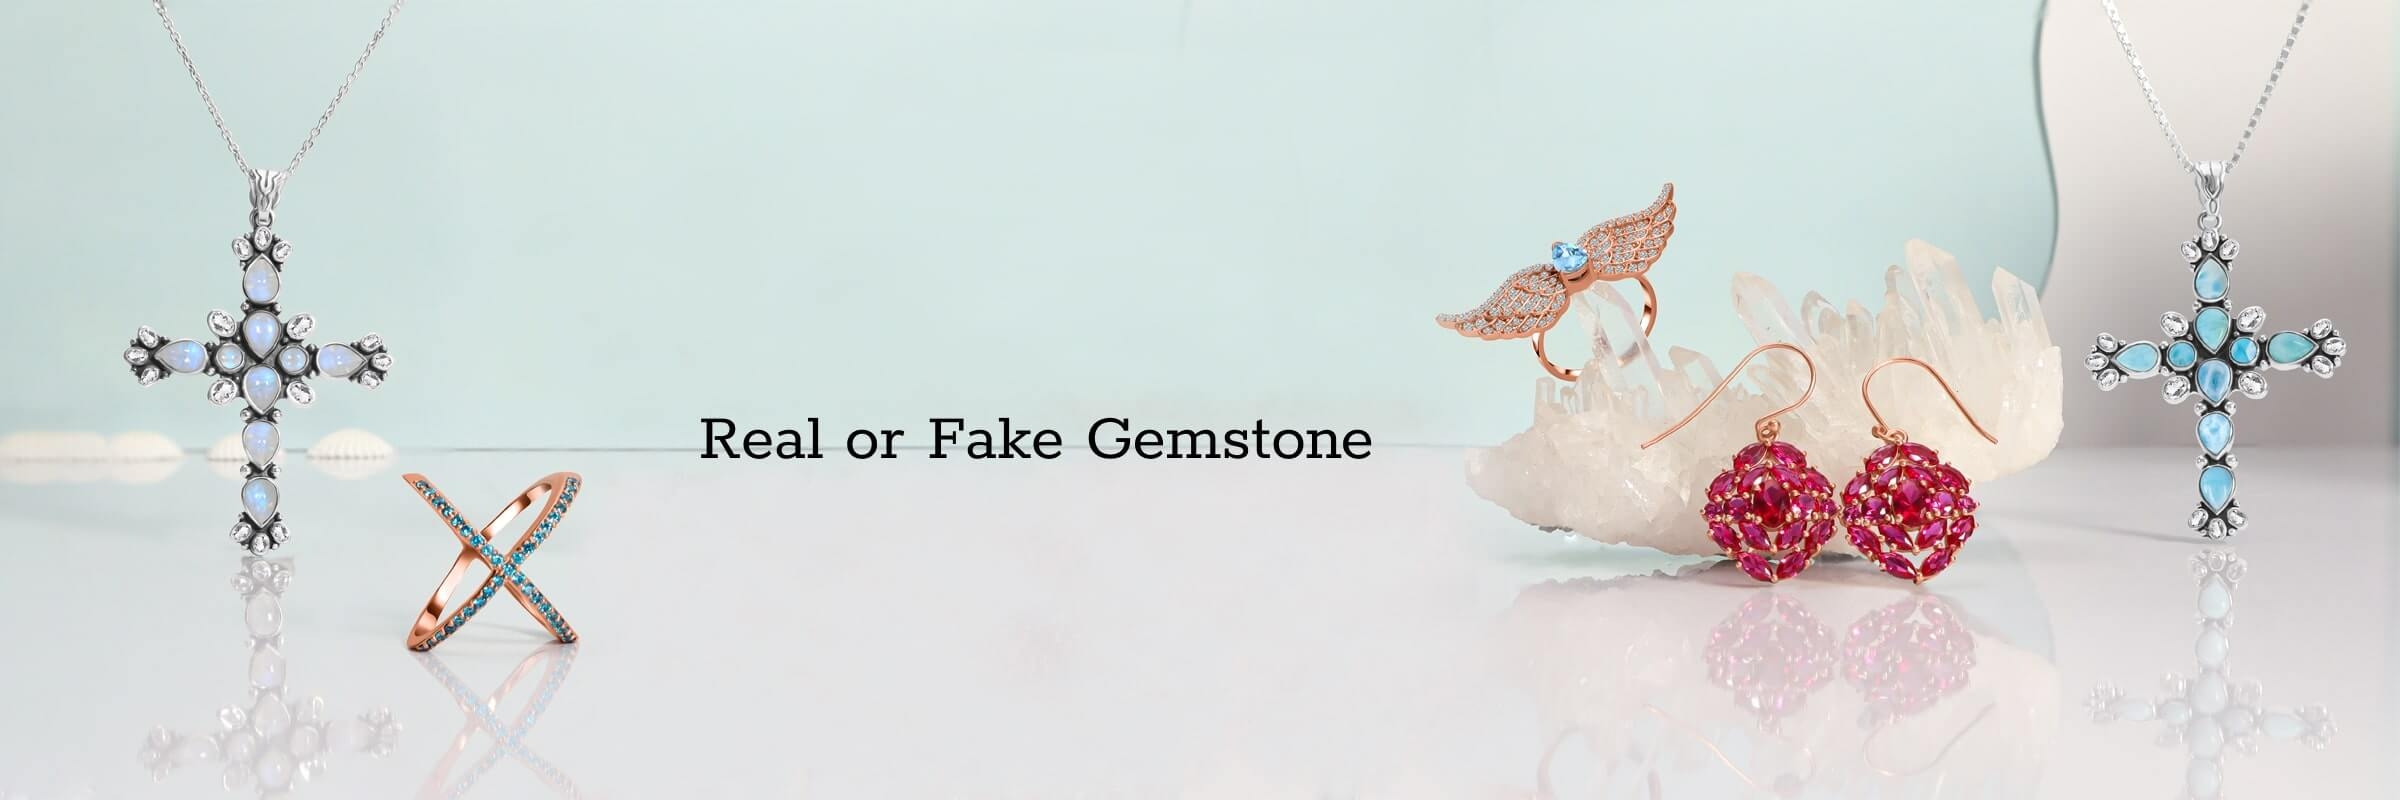 Identify the Gemstone Real or Fake